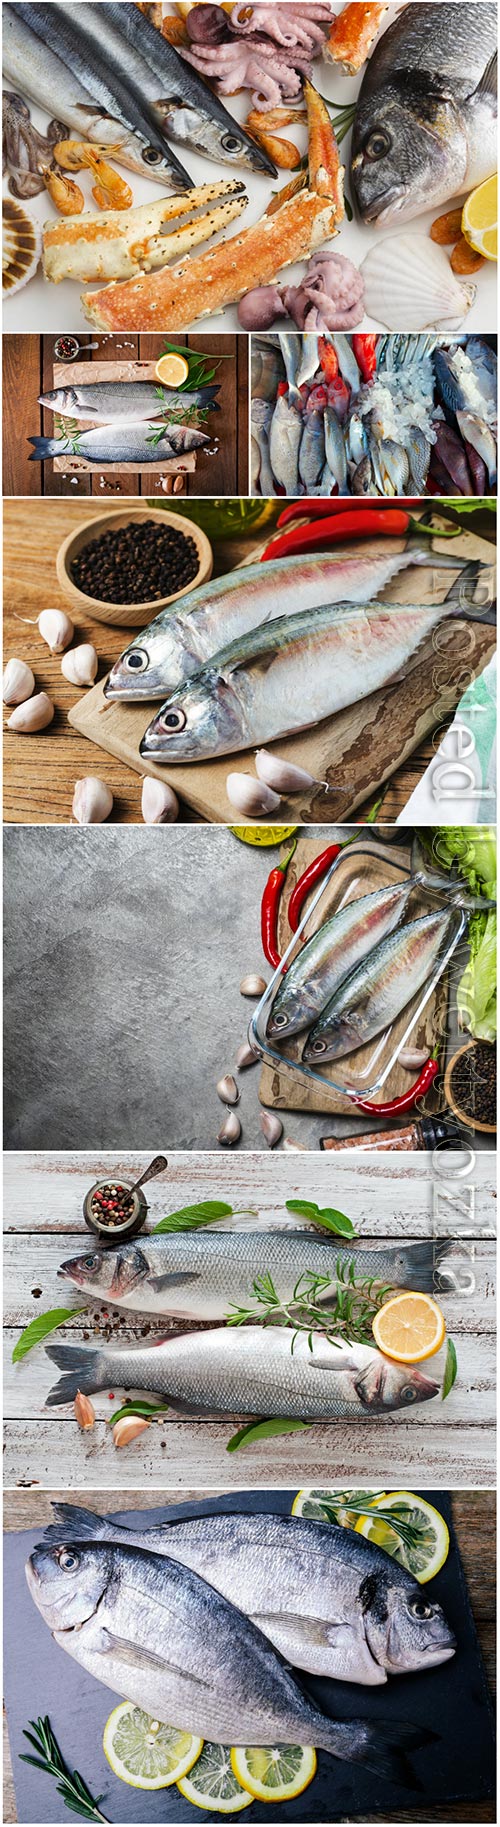 Fresh fish and seafood stock photo